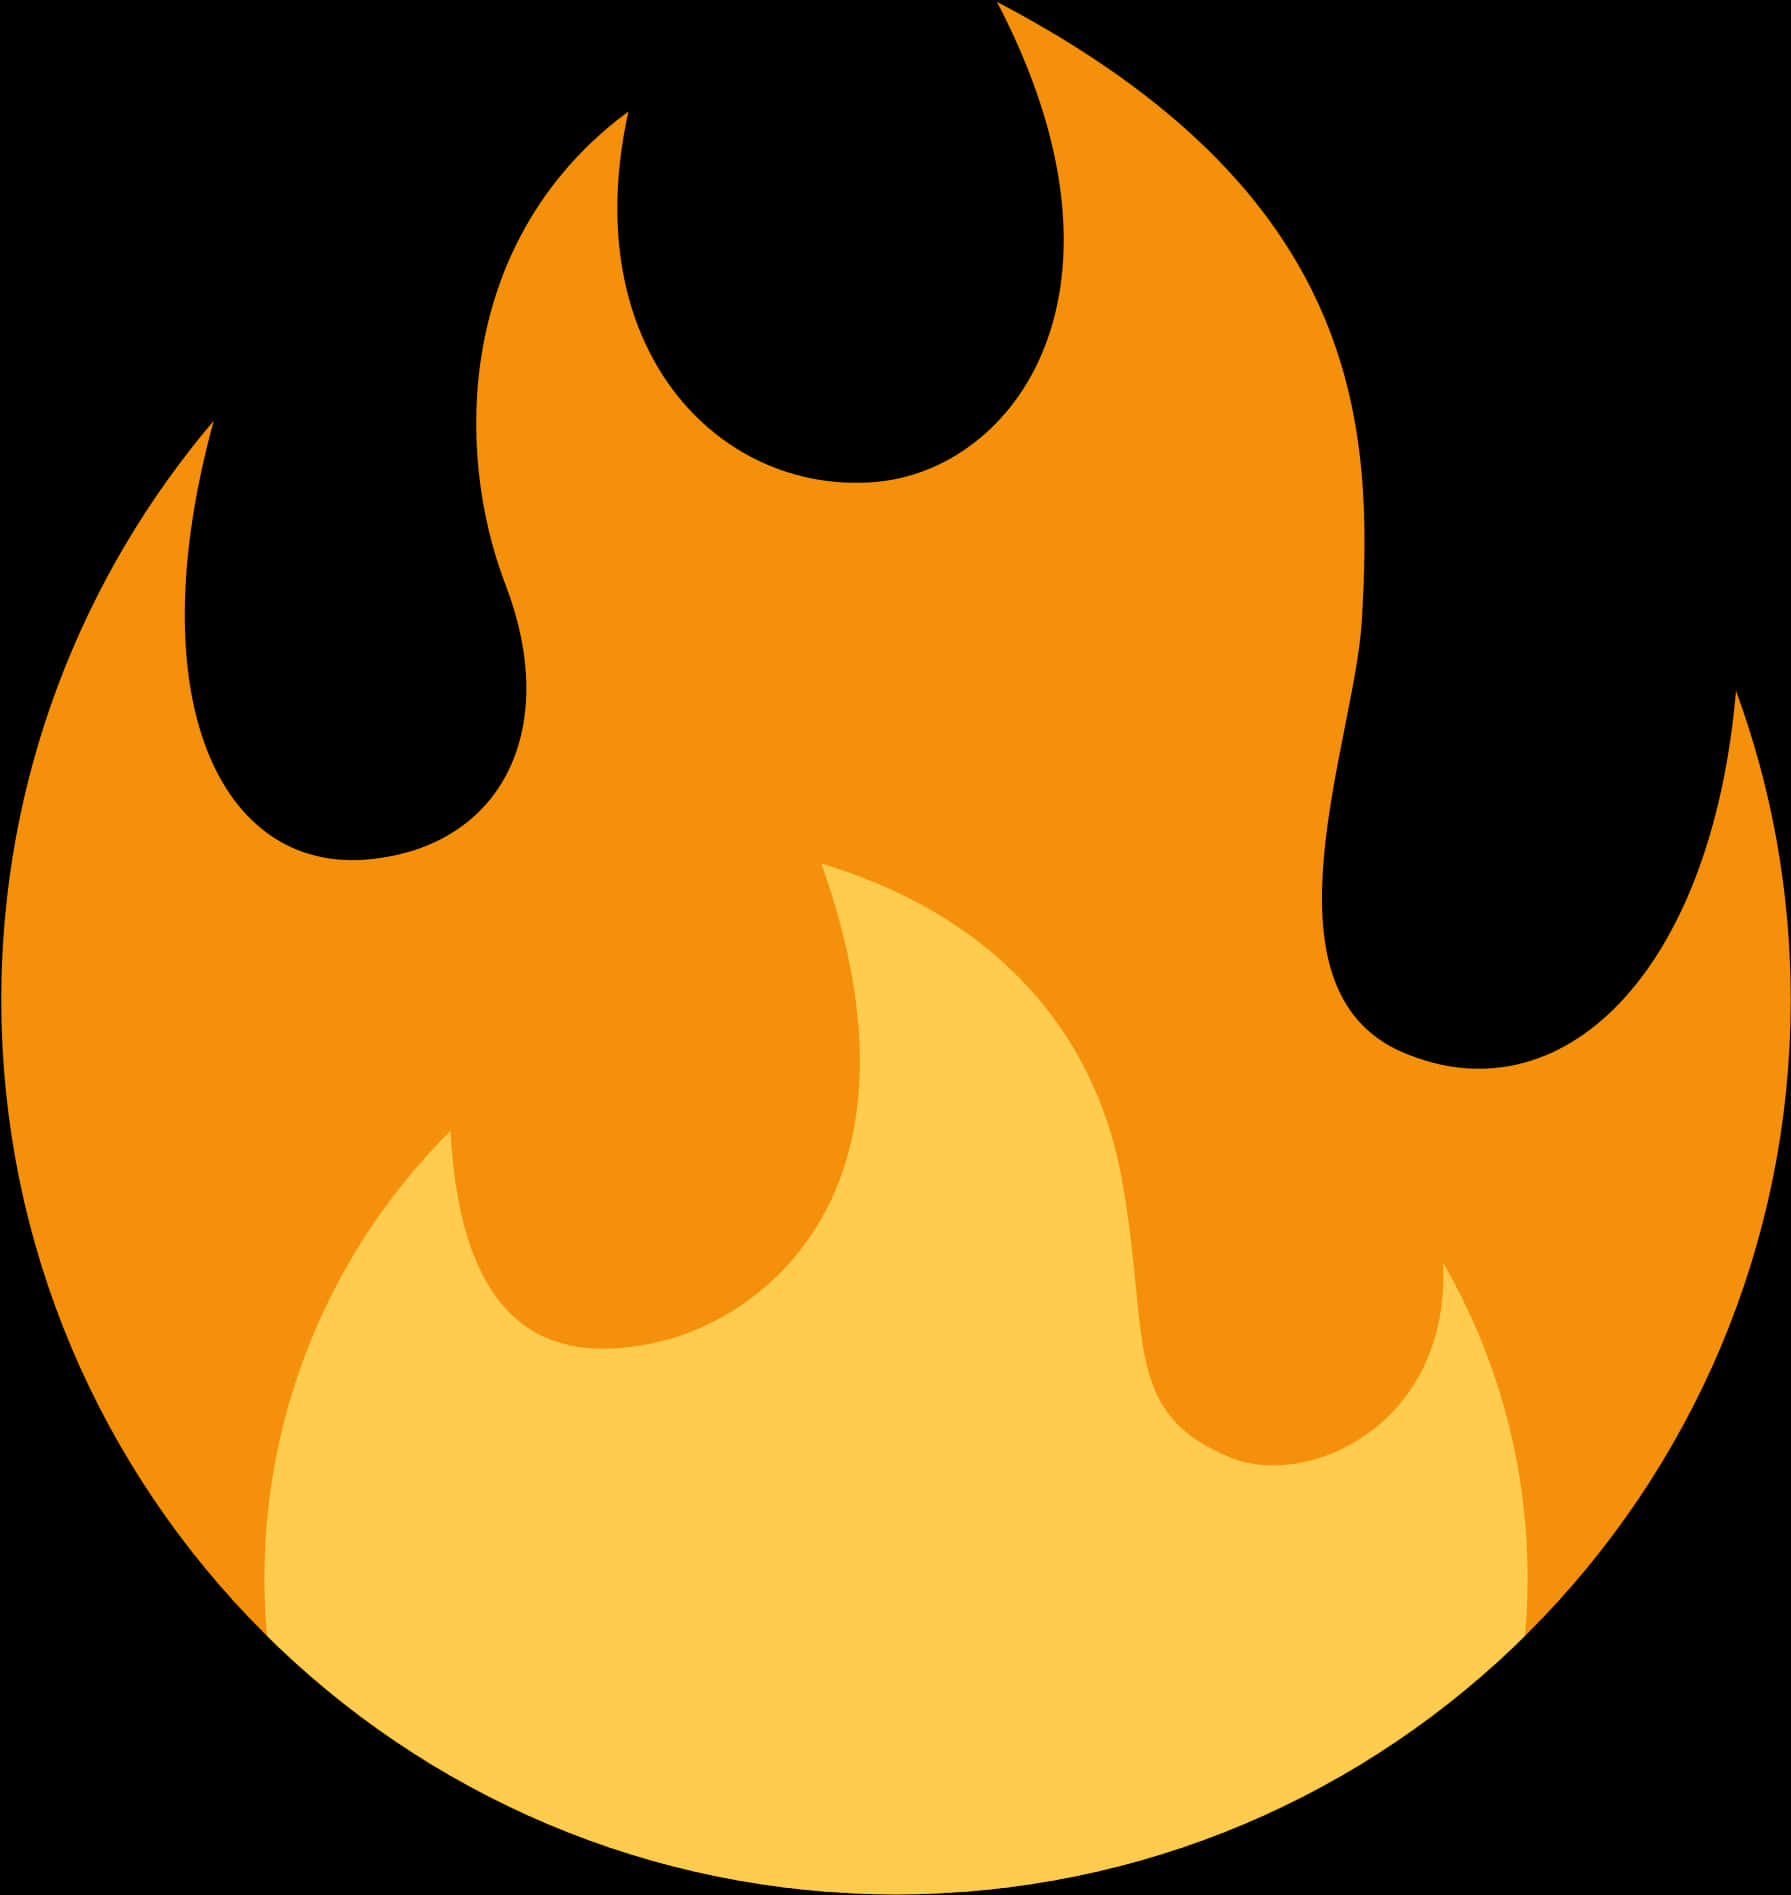 Flame Emoji Graphic PNG image